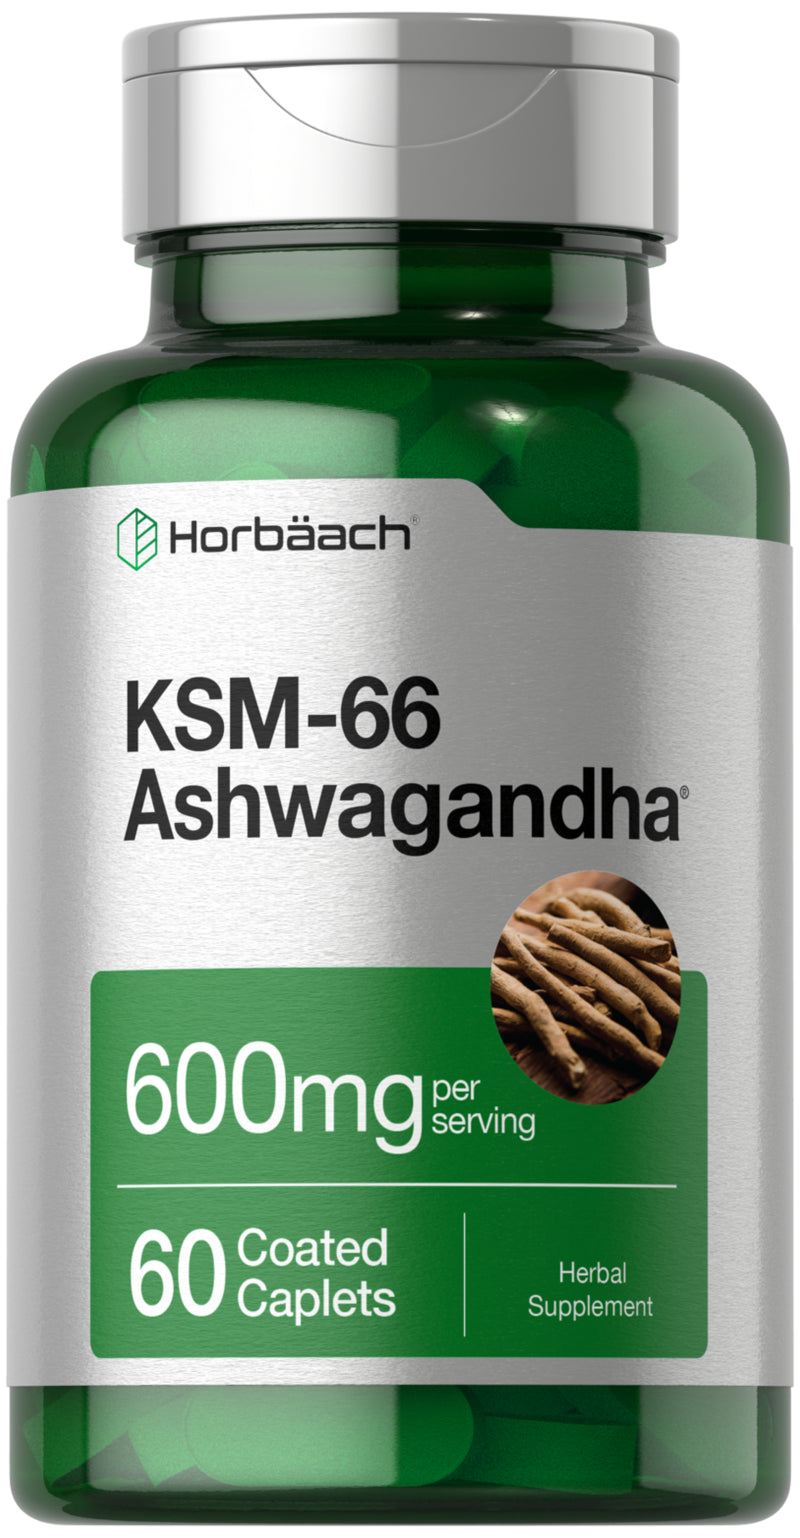 KSM-66 Ashwagandha 600Mg | 60 Caplets | Vegan Supplement | by Horbaach